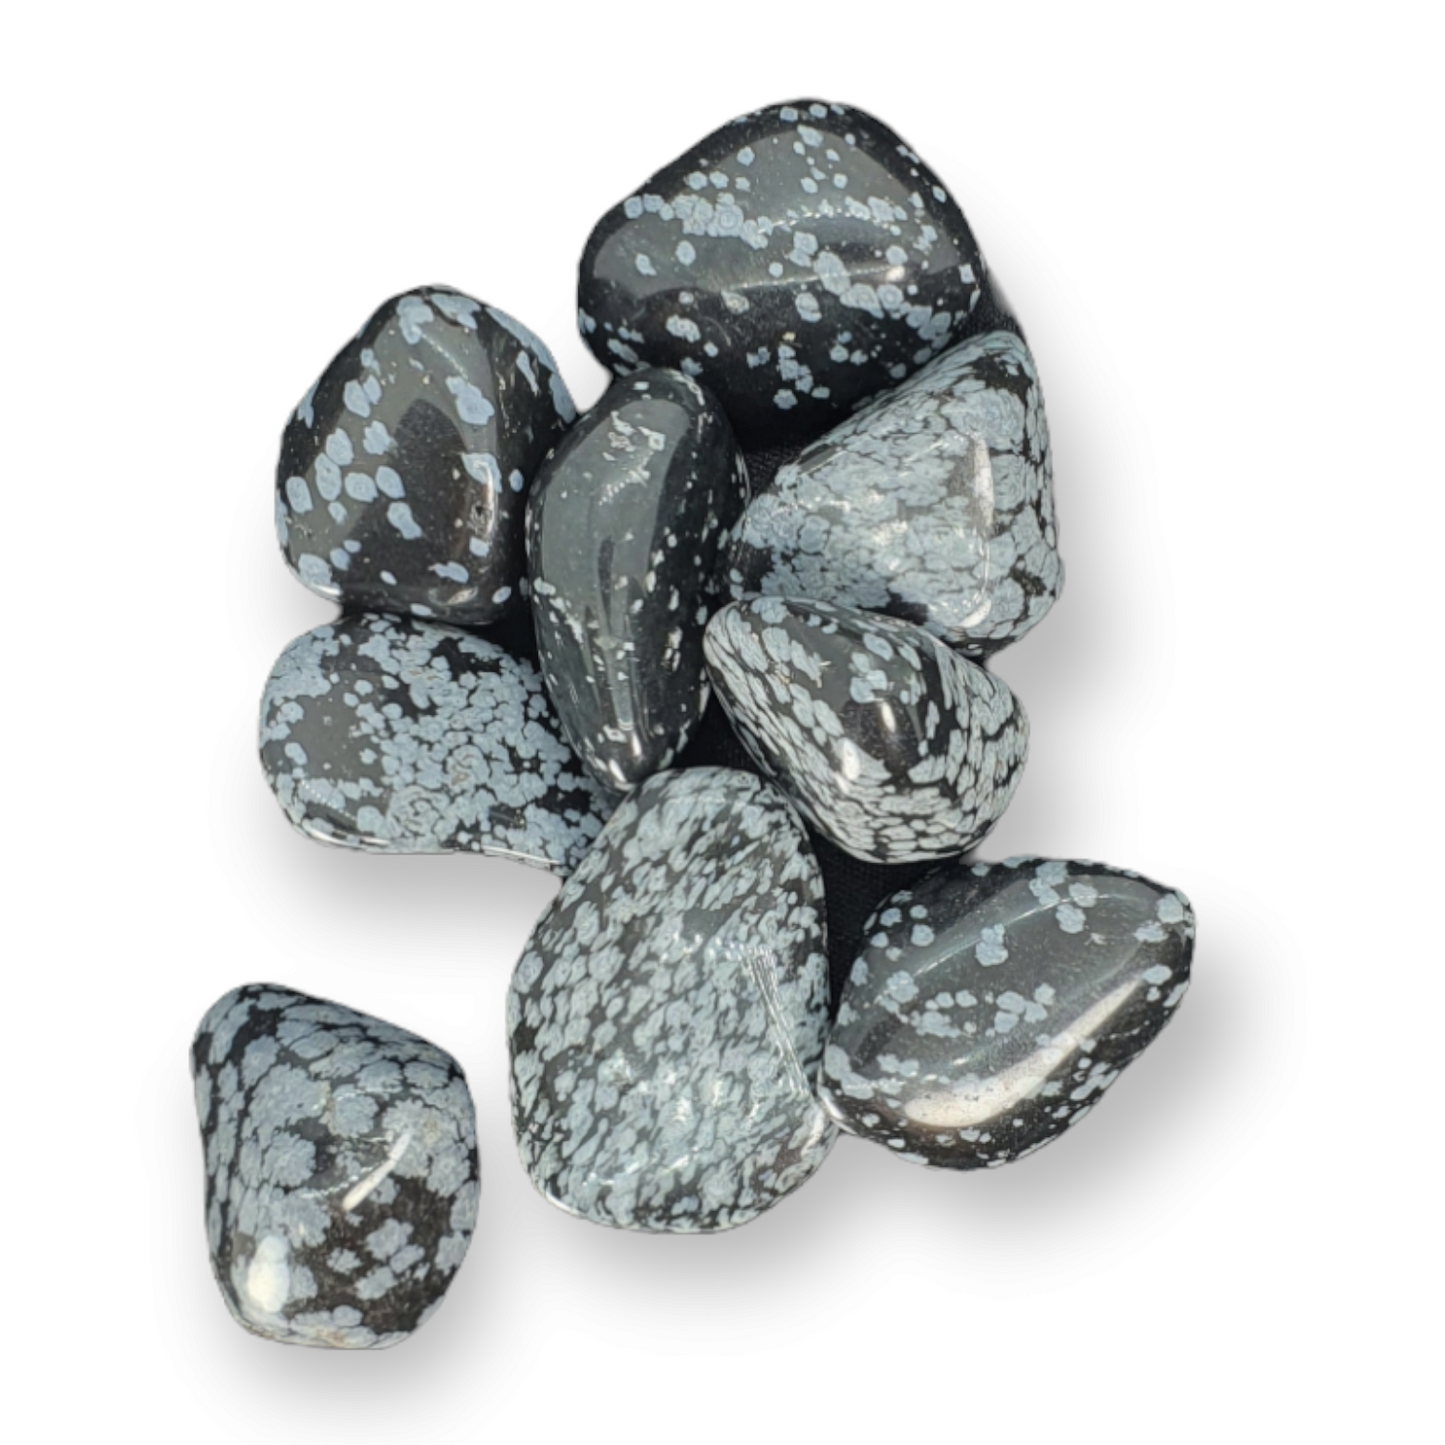 Crystals - Obsidian (Snowflake) Tumbled Stone